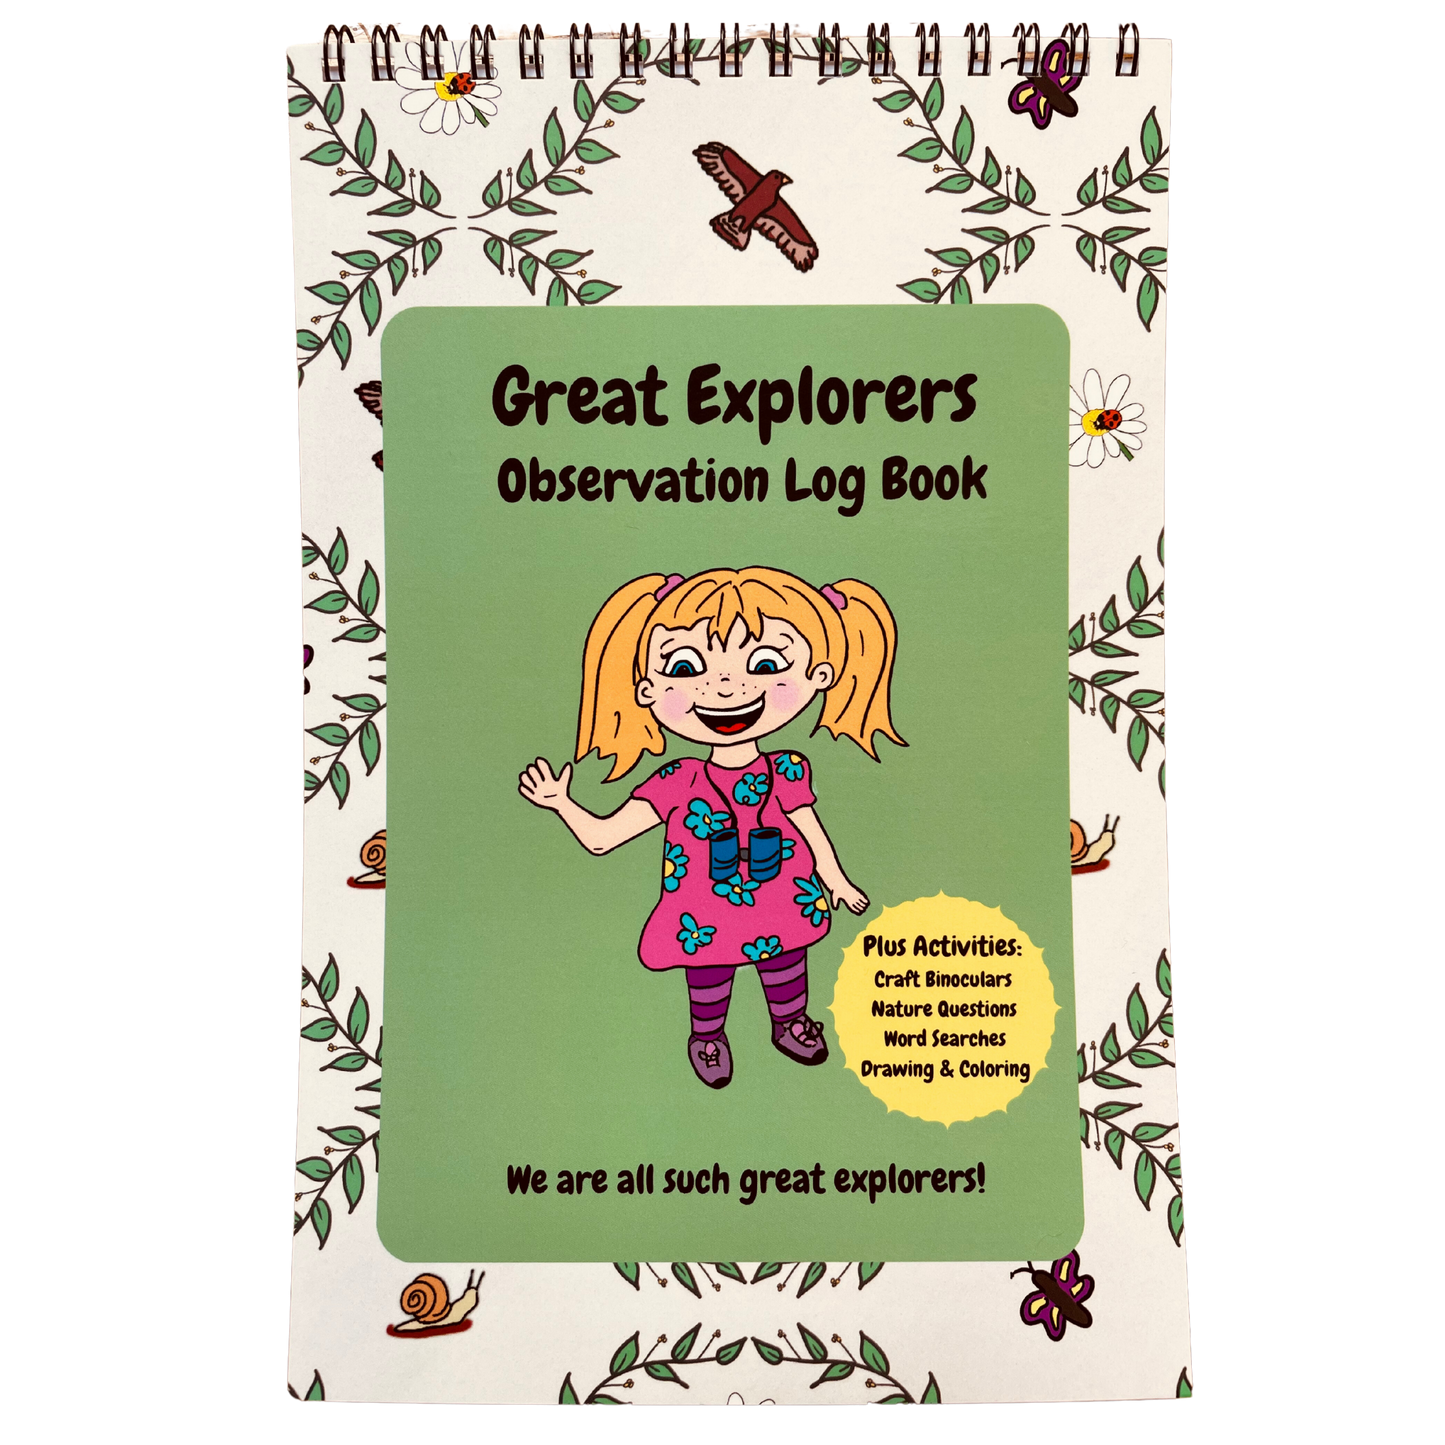 Great Explorers Bundle (Paperback book and spiral log book)